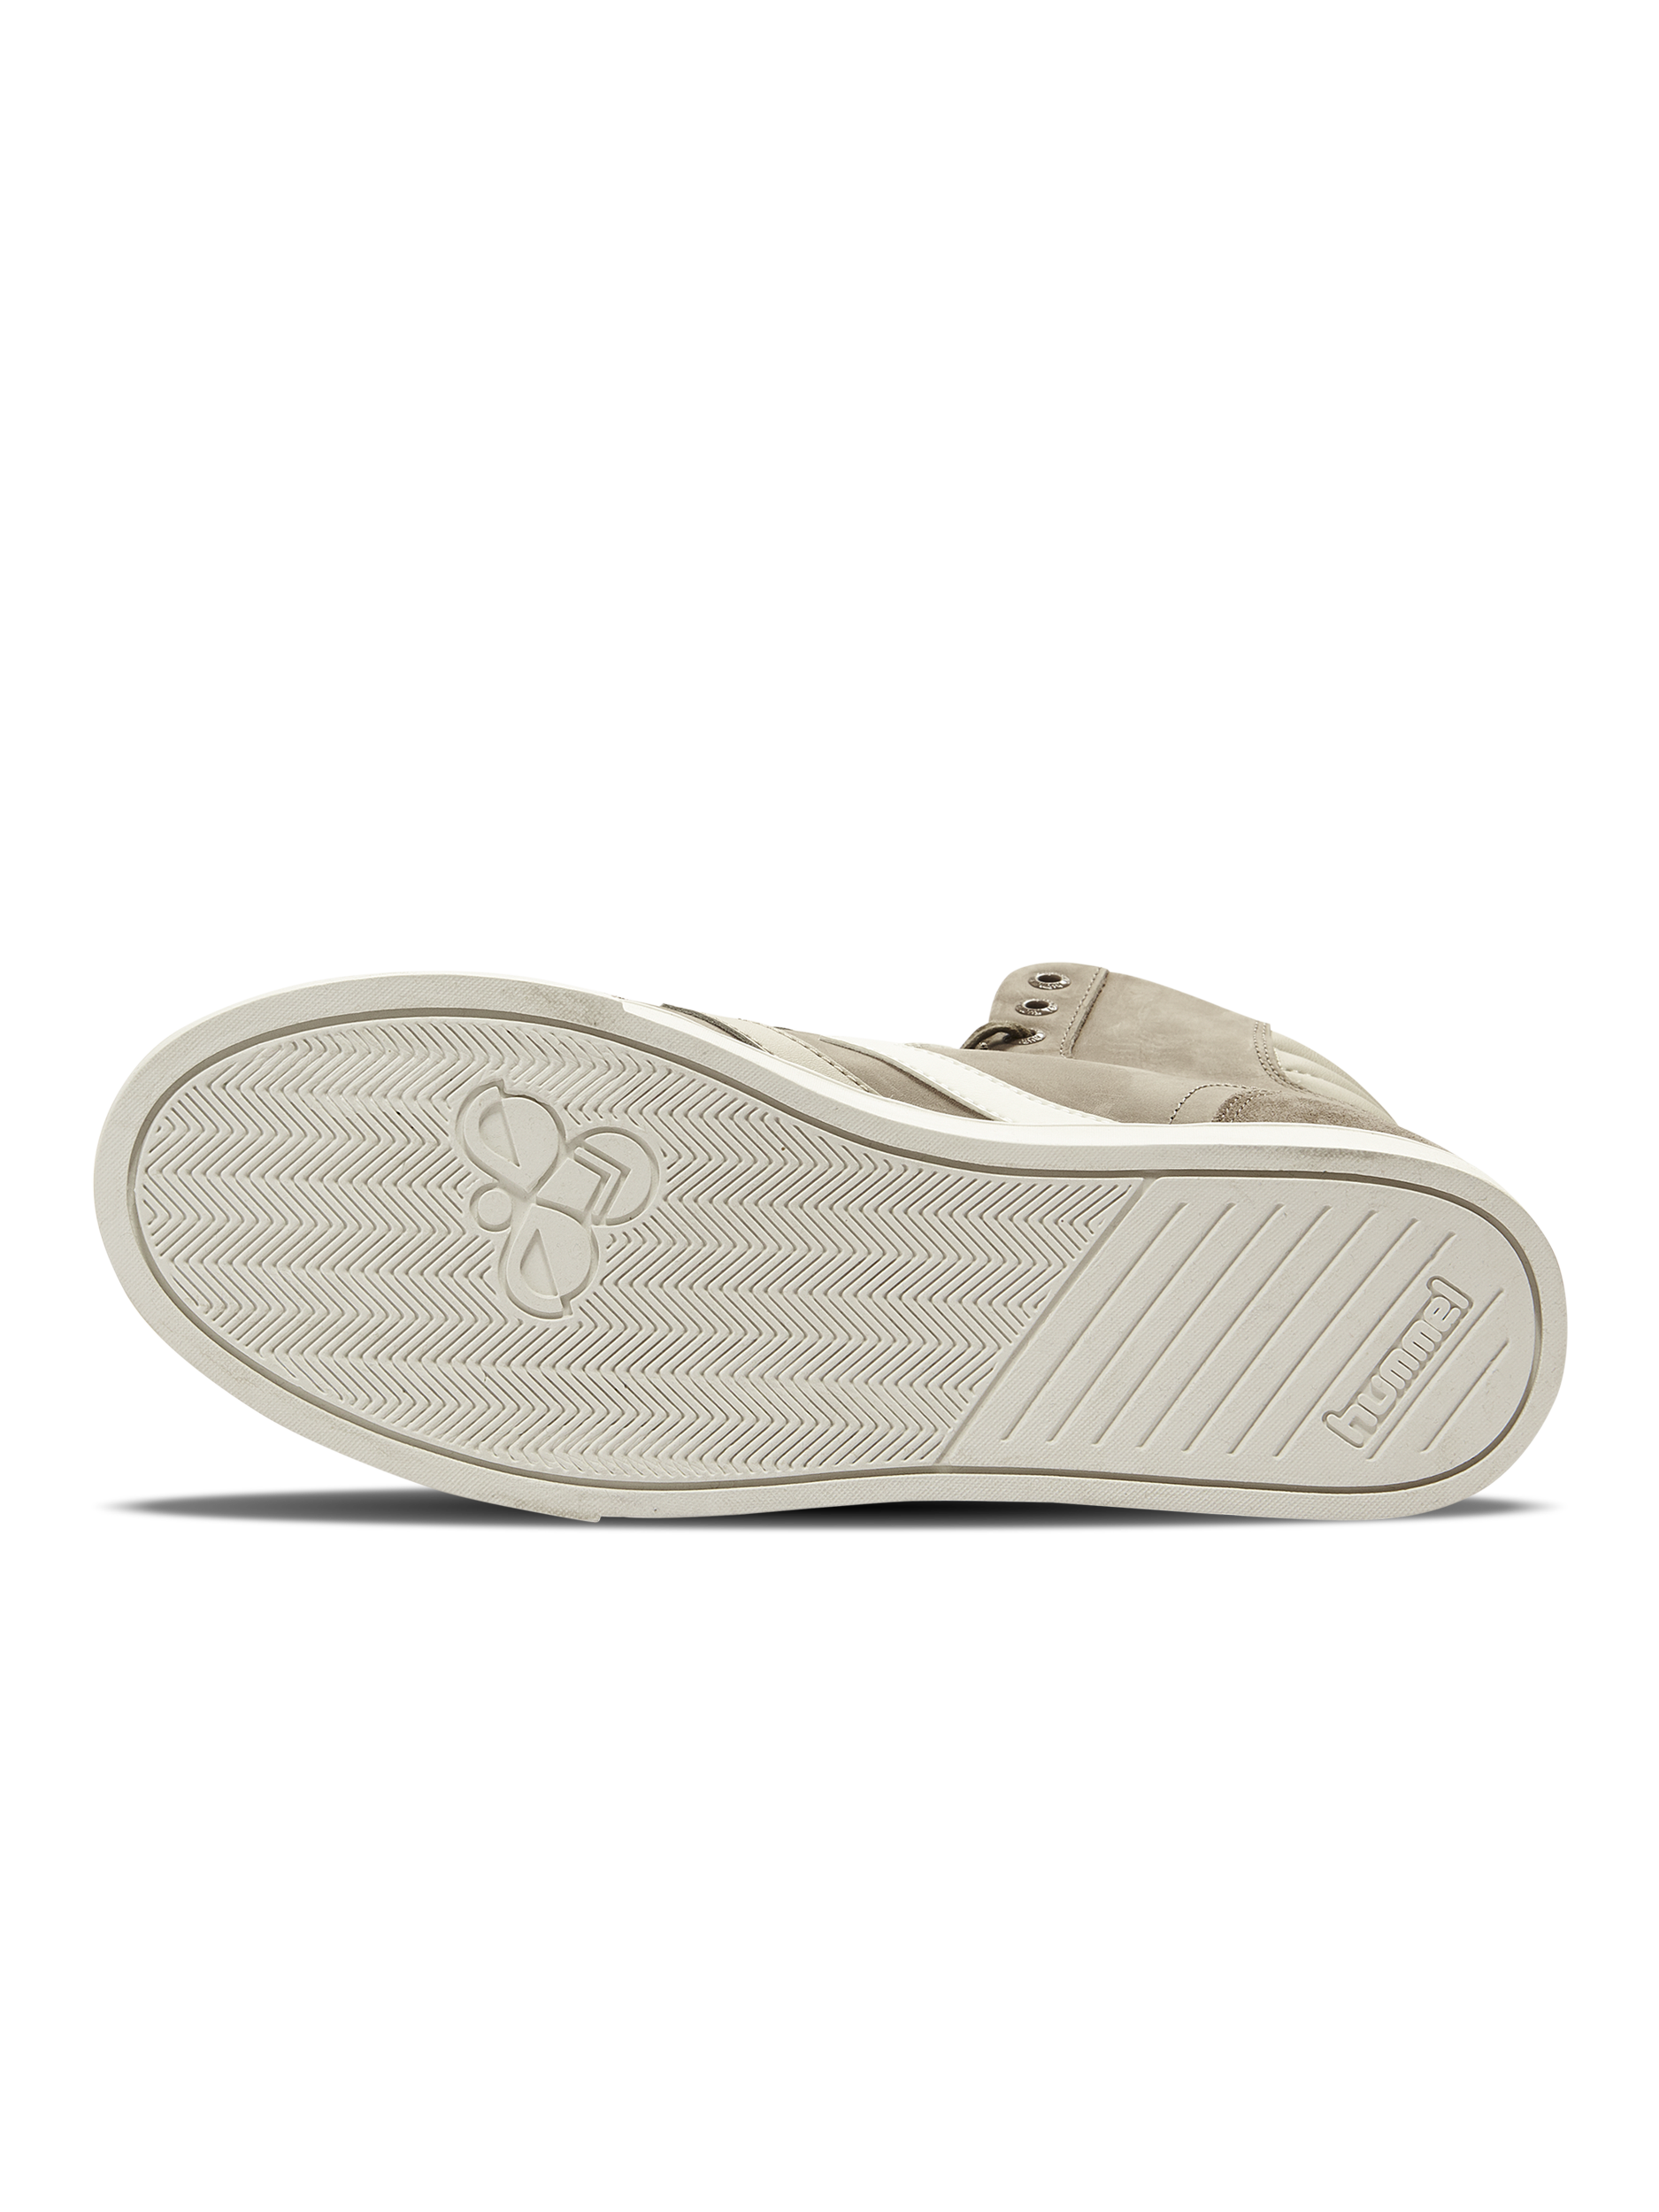 Hummel Slimmer Stadil Duo Oiled Low Cut Sneaker Retro Schuhe alloy 201-945-1100 